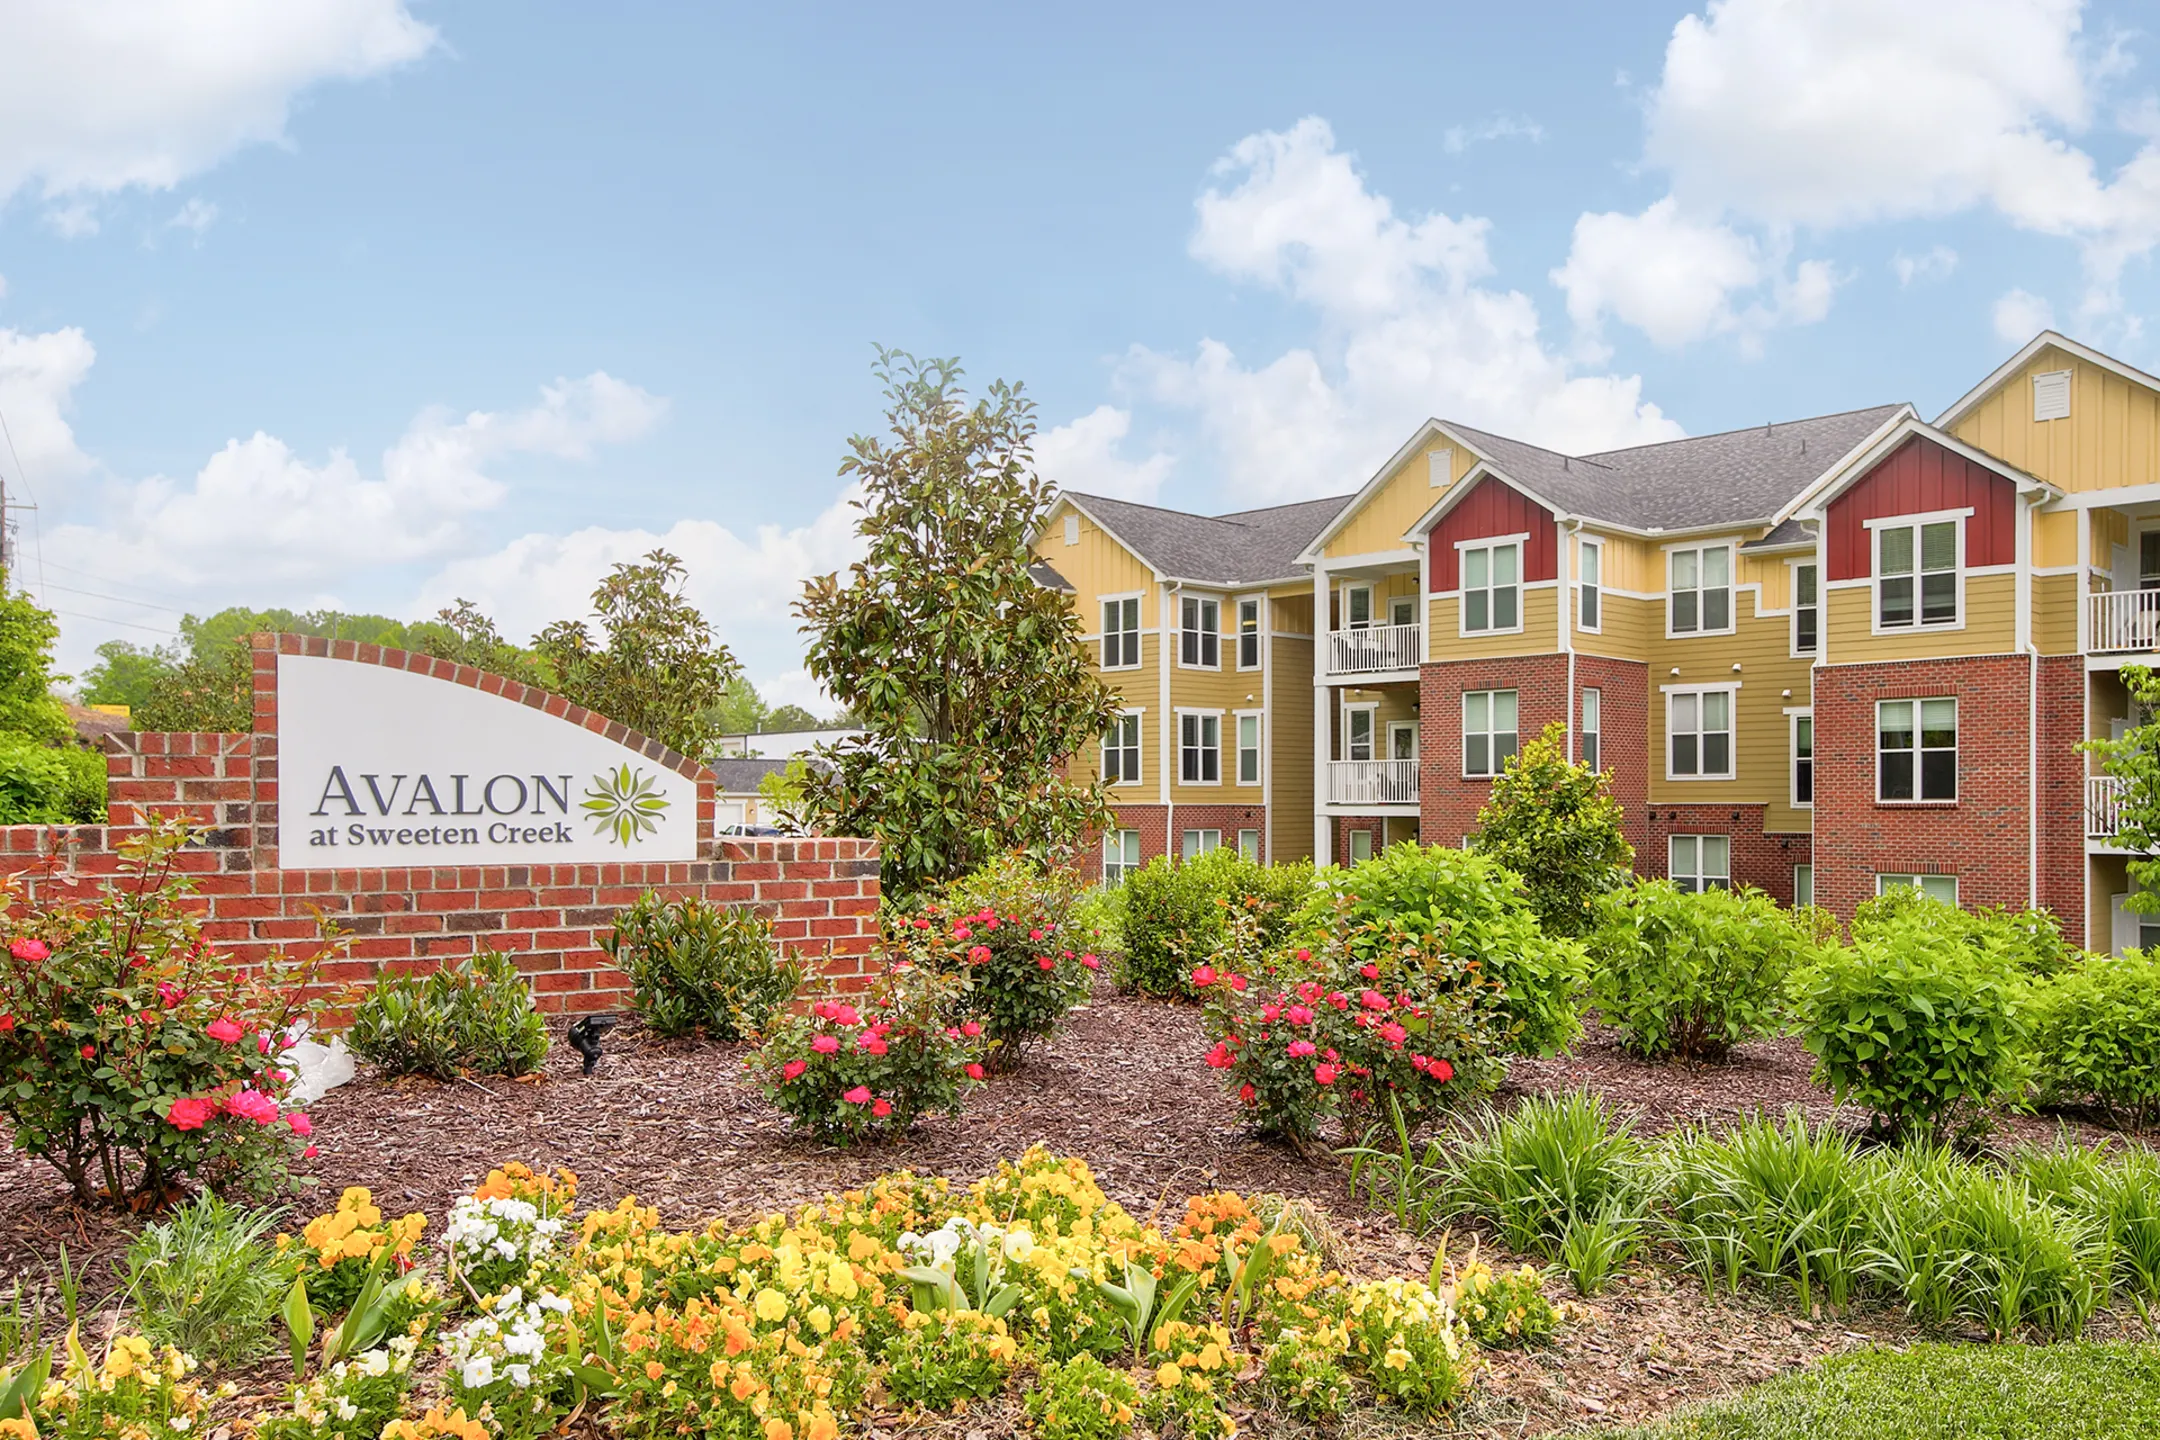 Building - Avalon at Sweeten Creek Apartments - Arden, NC